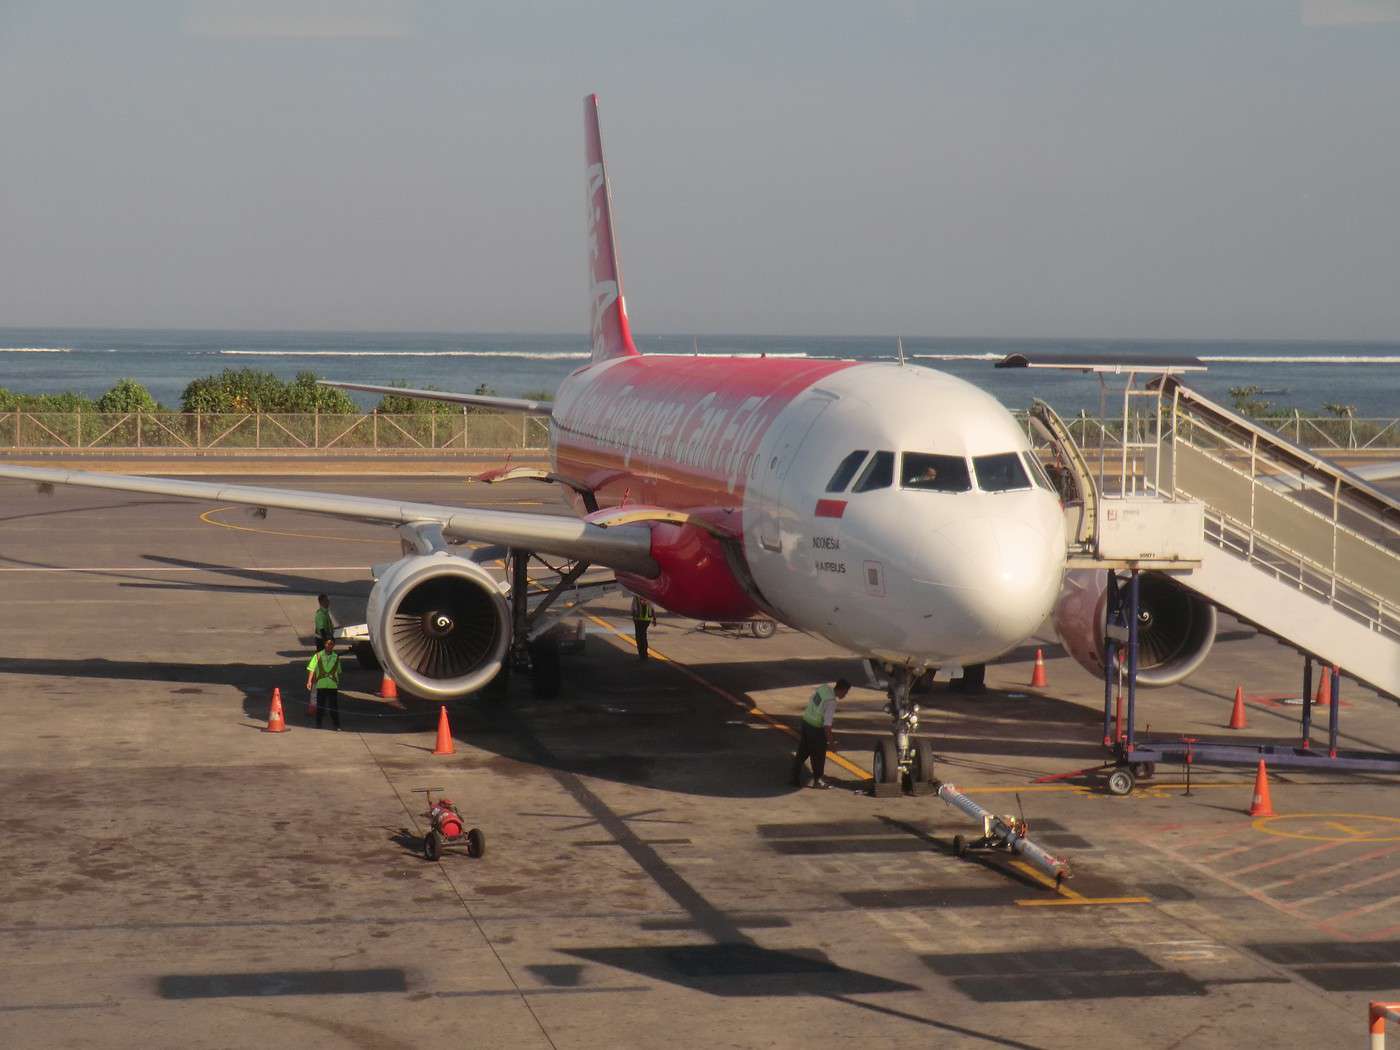 R servation d avion  de Bali   Flor s Compagnies 